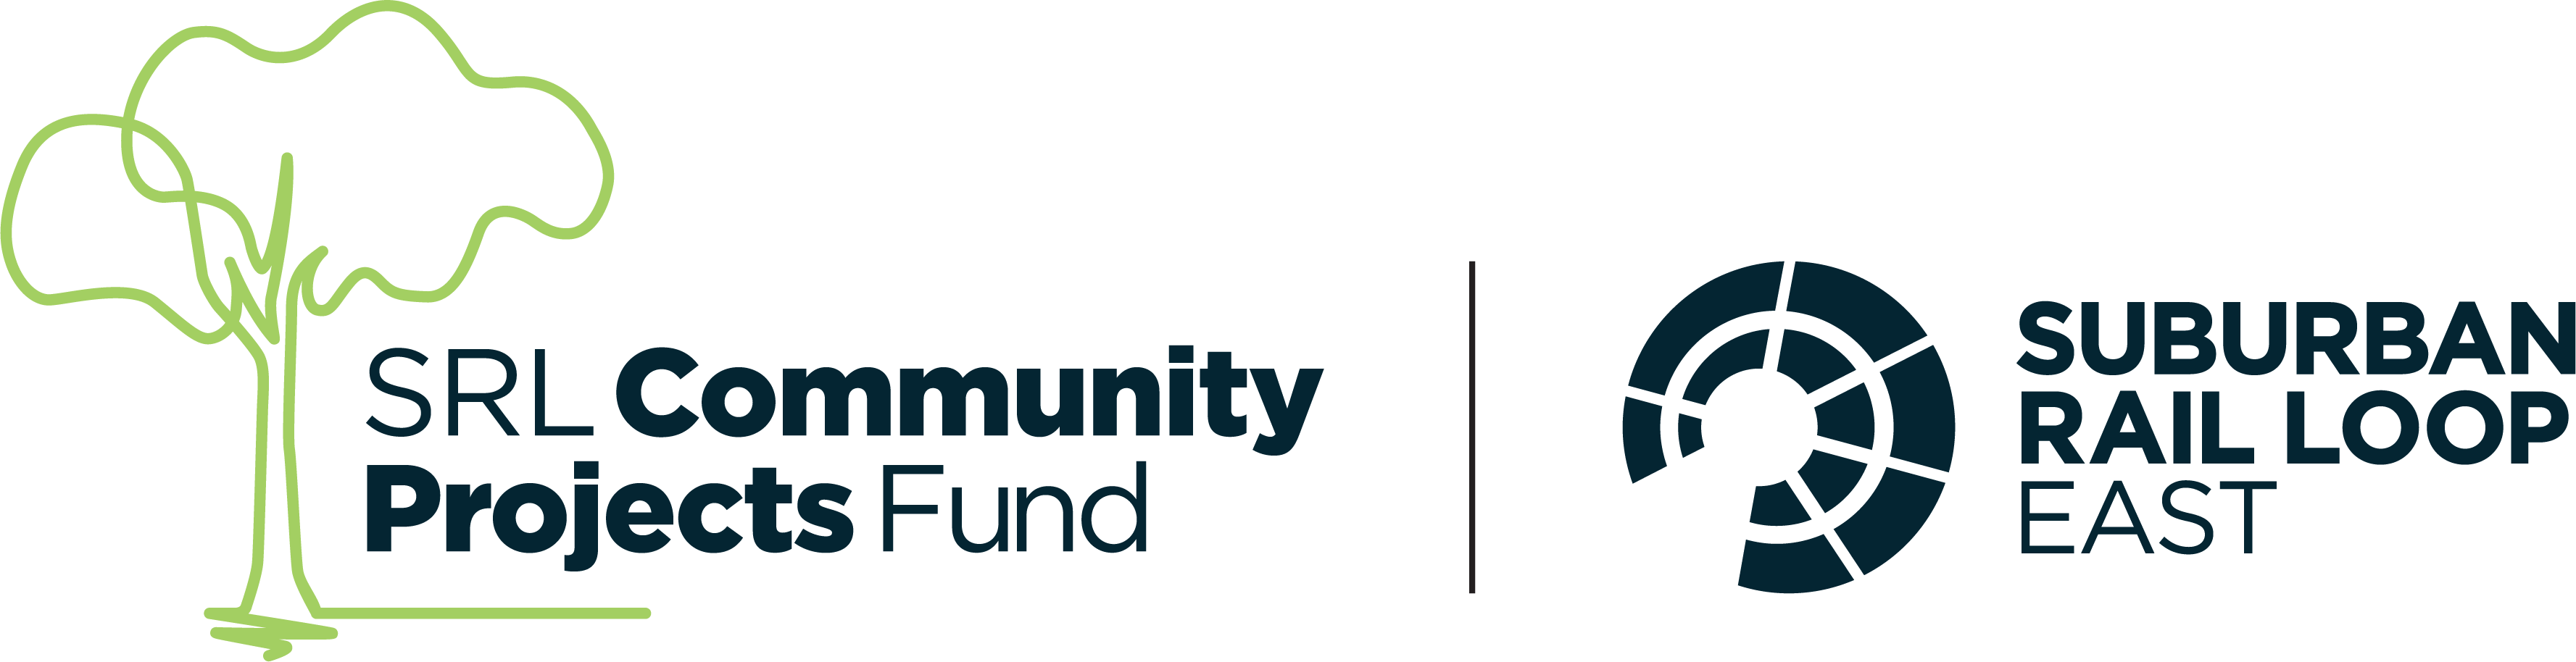 Community Projects Fun and Suburban Rail Loop logos